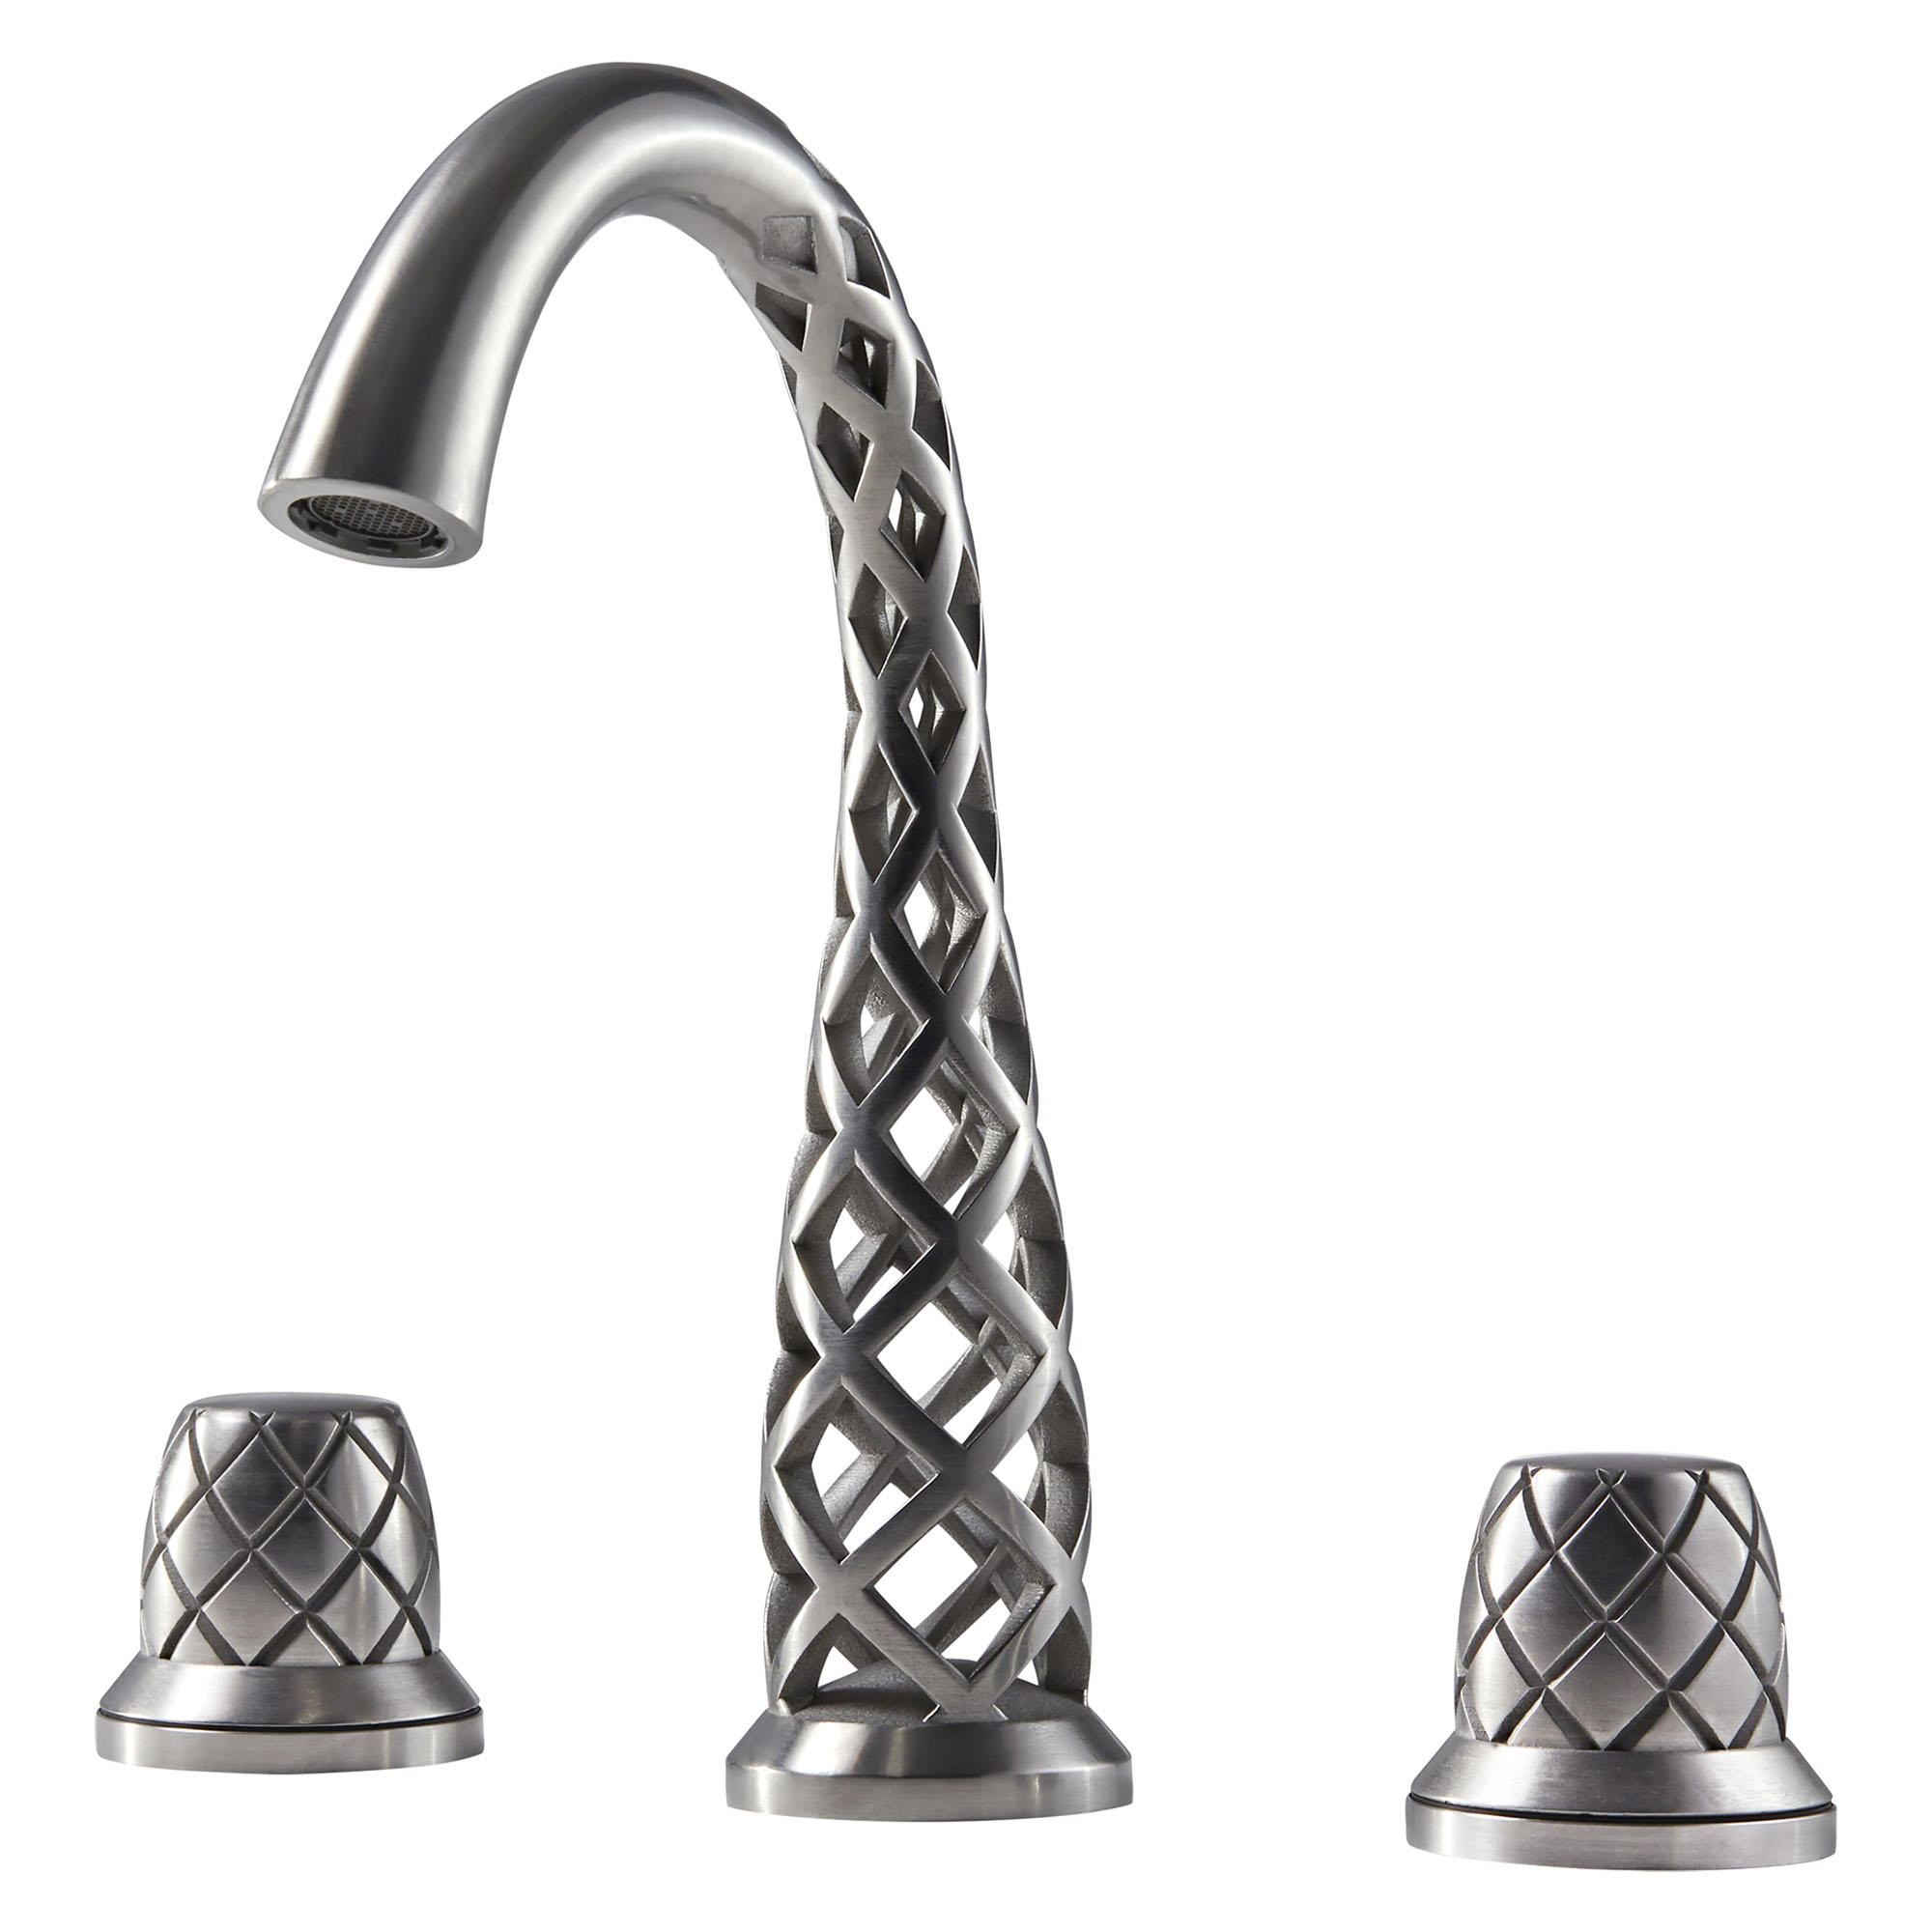 Vibrato 2- Handle Widespread 3D Printed Bathroom Faucet with Knob Handles